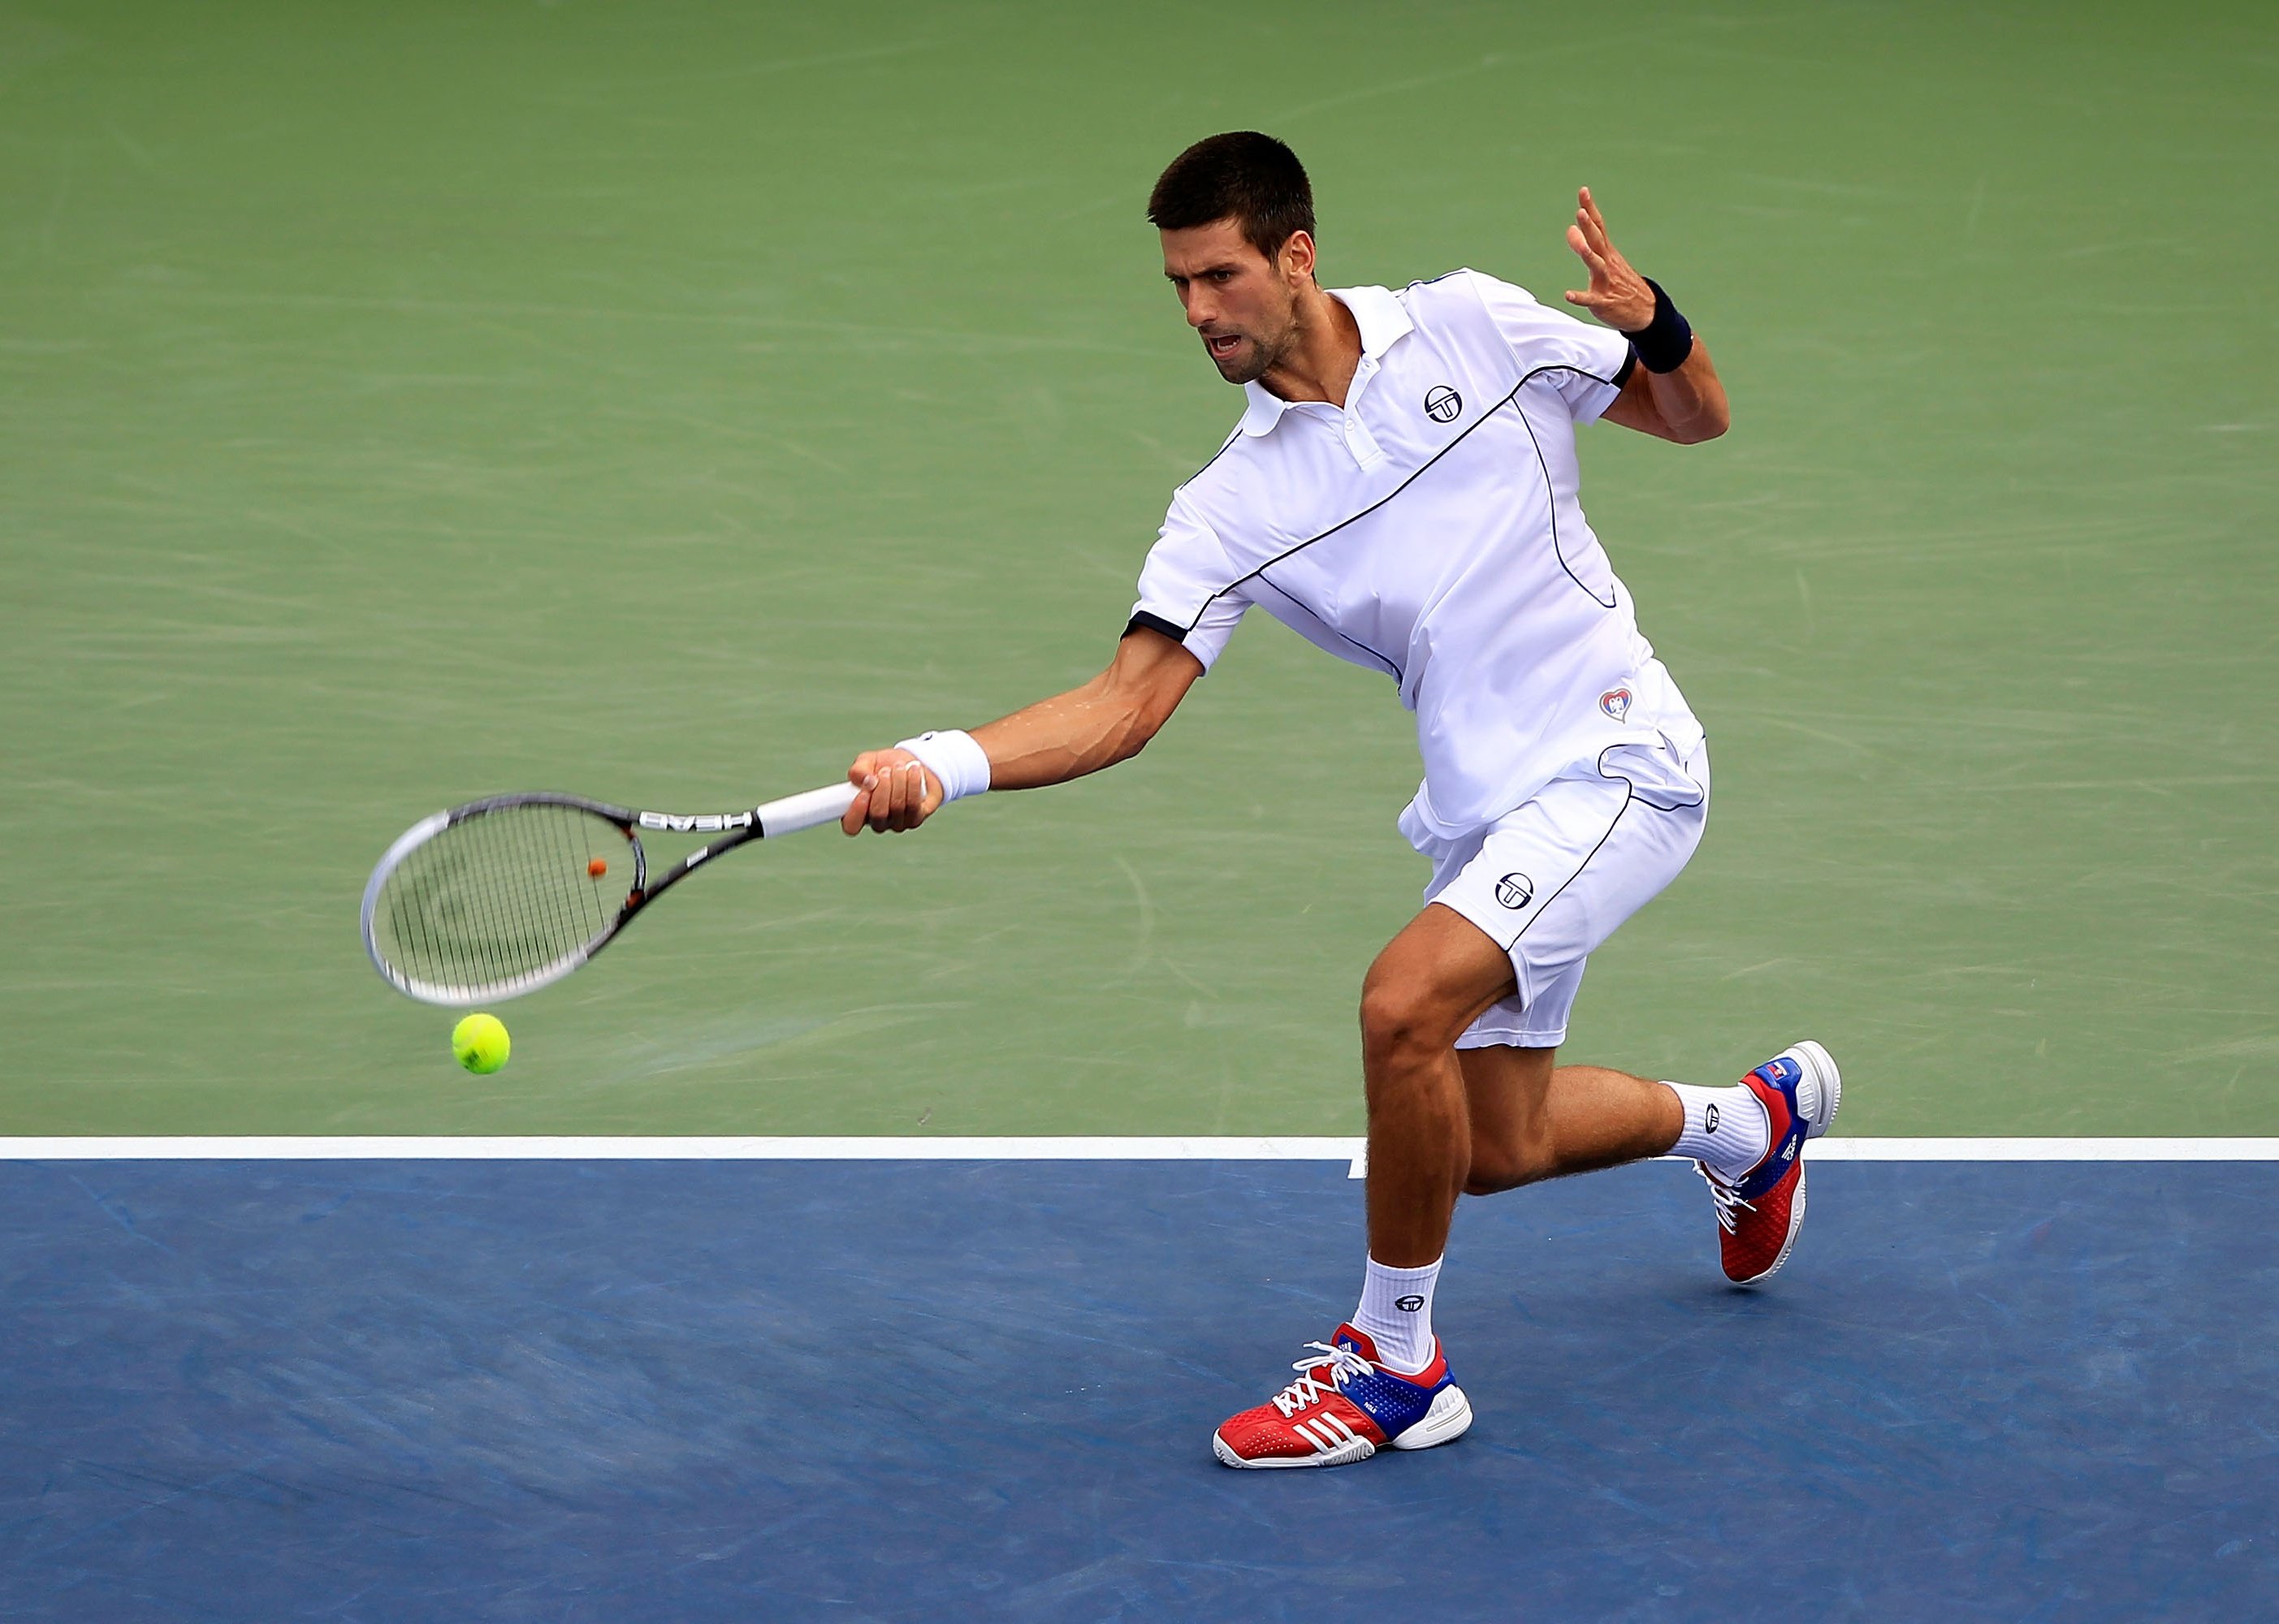 Novak Djokovic returns a shot during the 2011 U.S. Open.